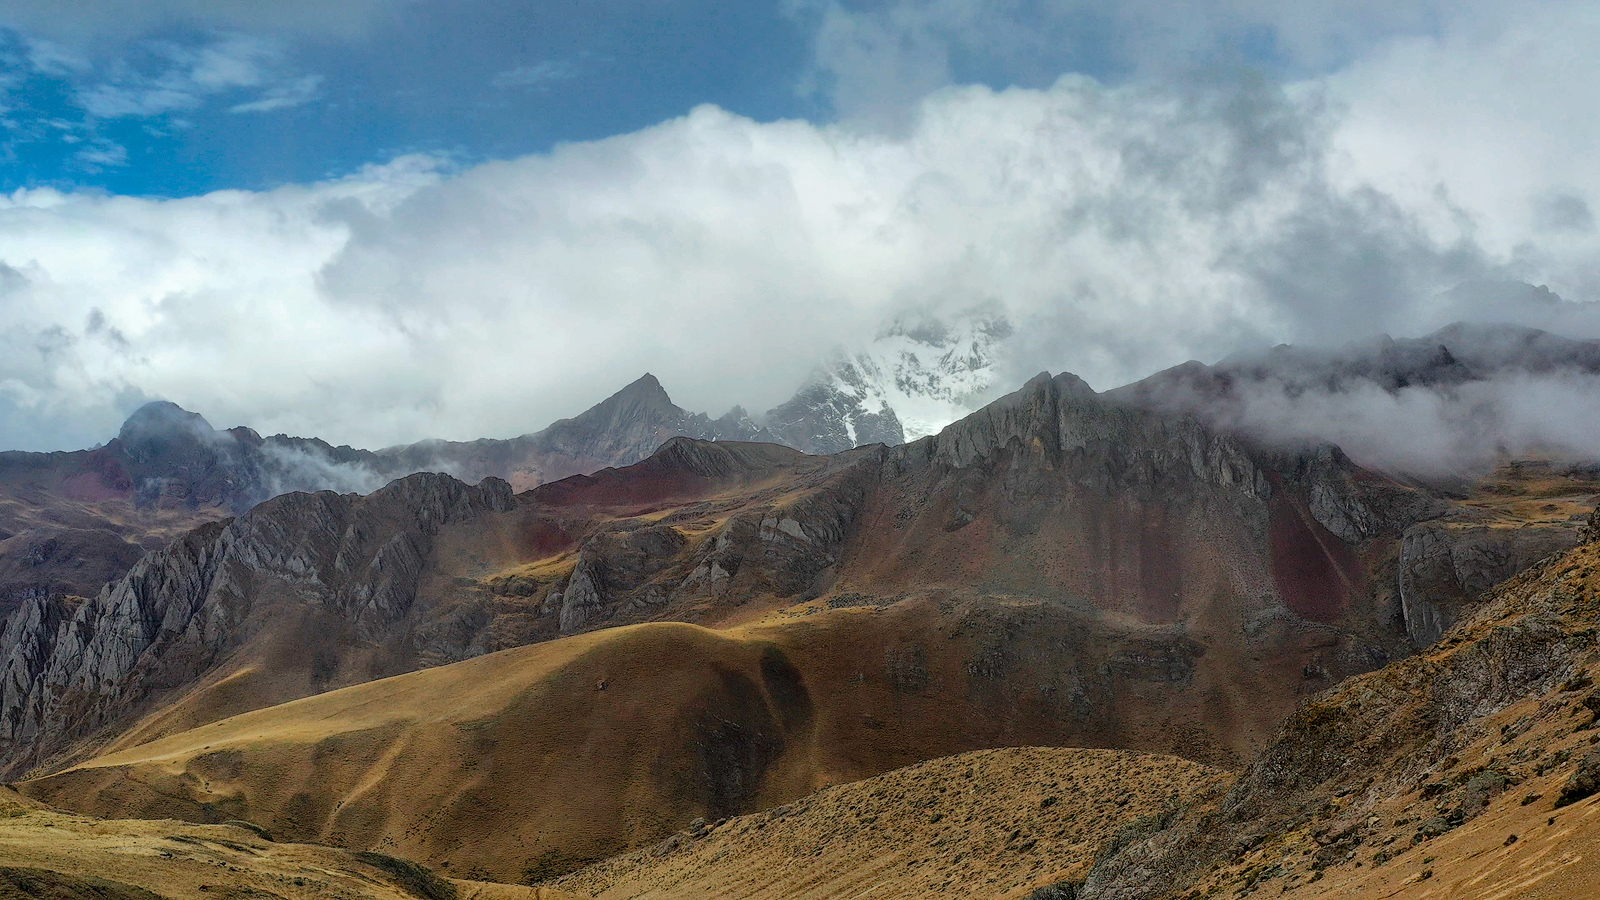 Cordillera Huayhuash Trek